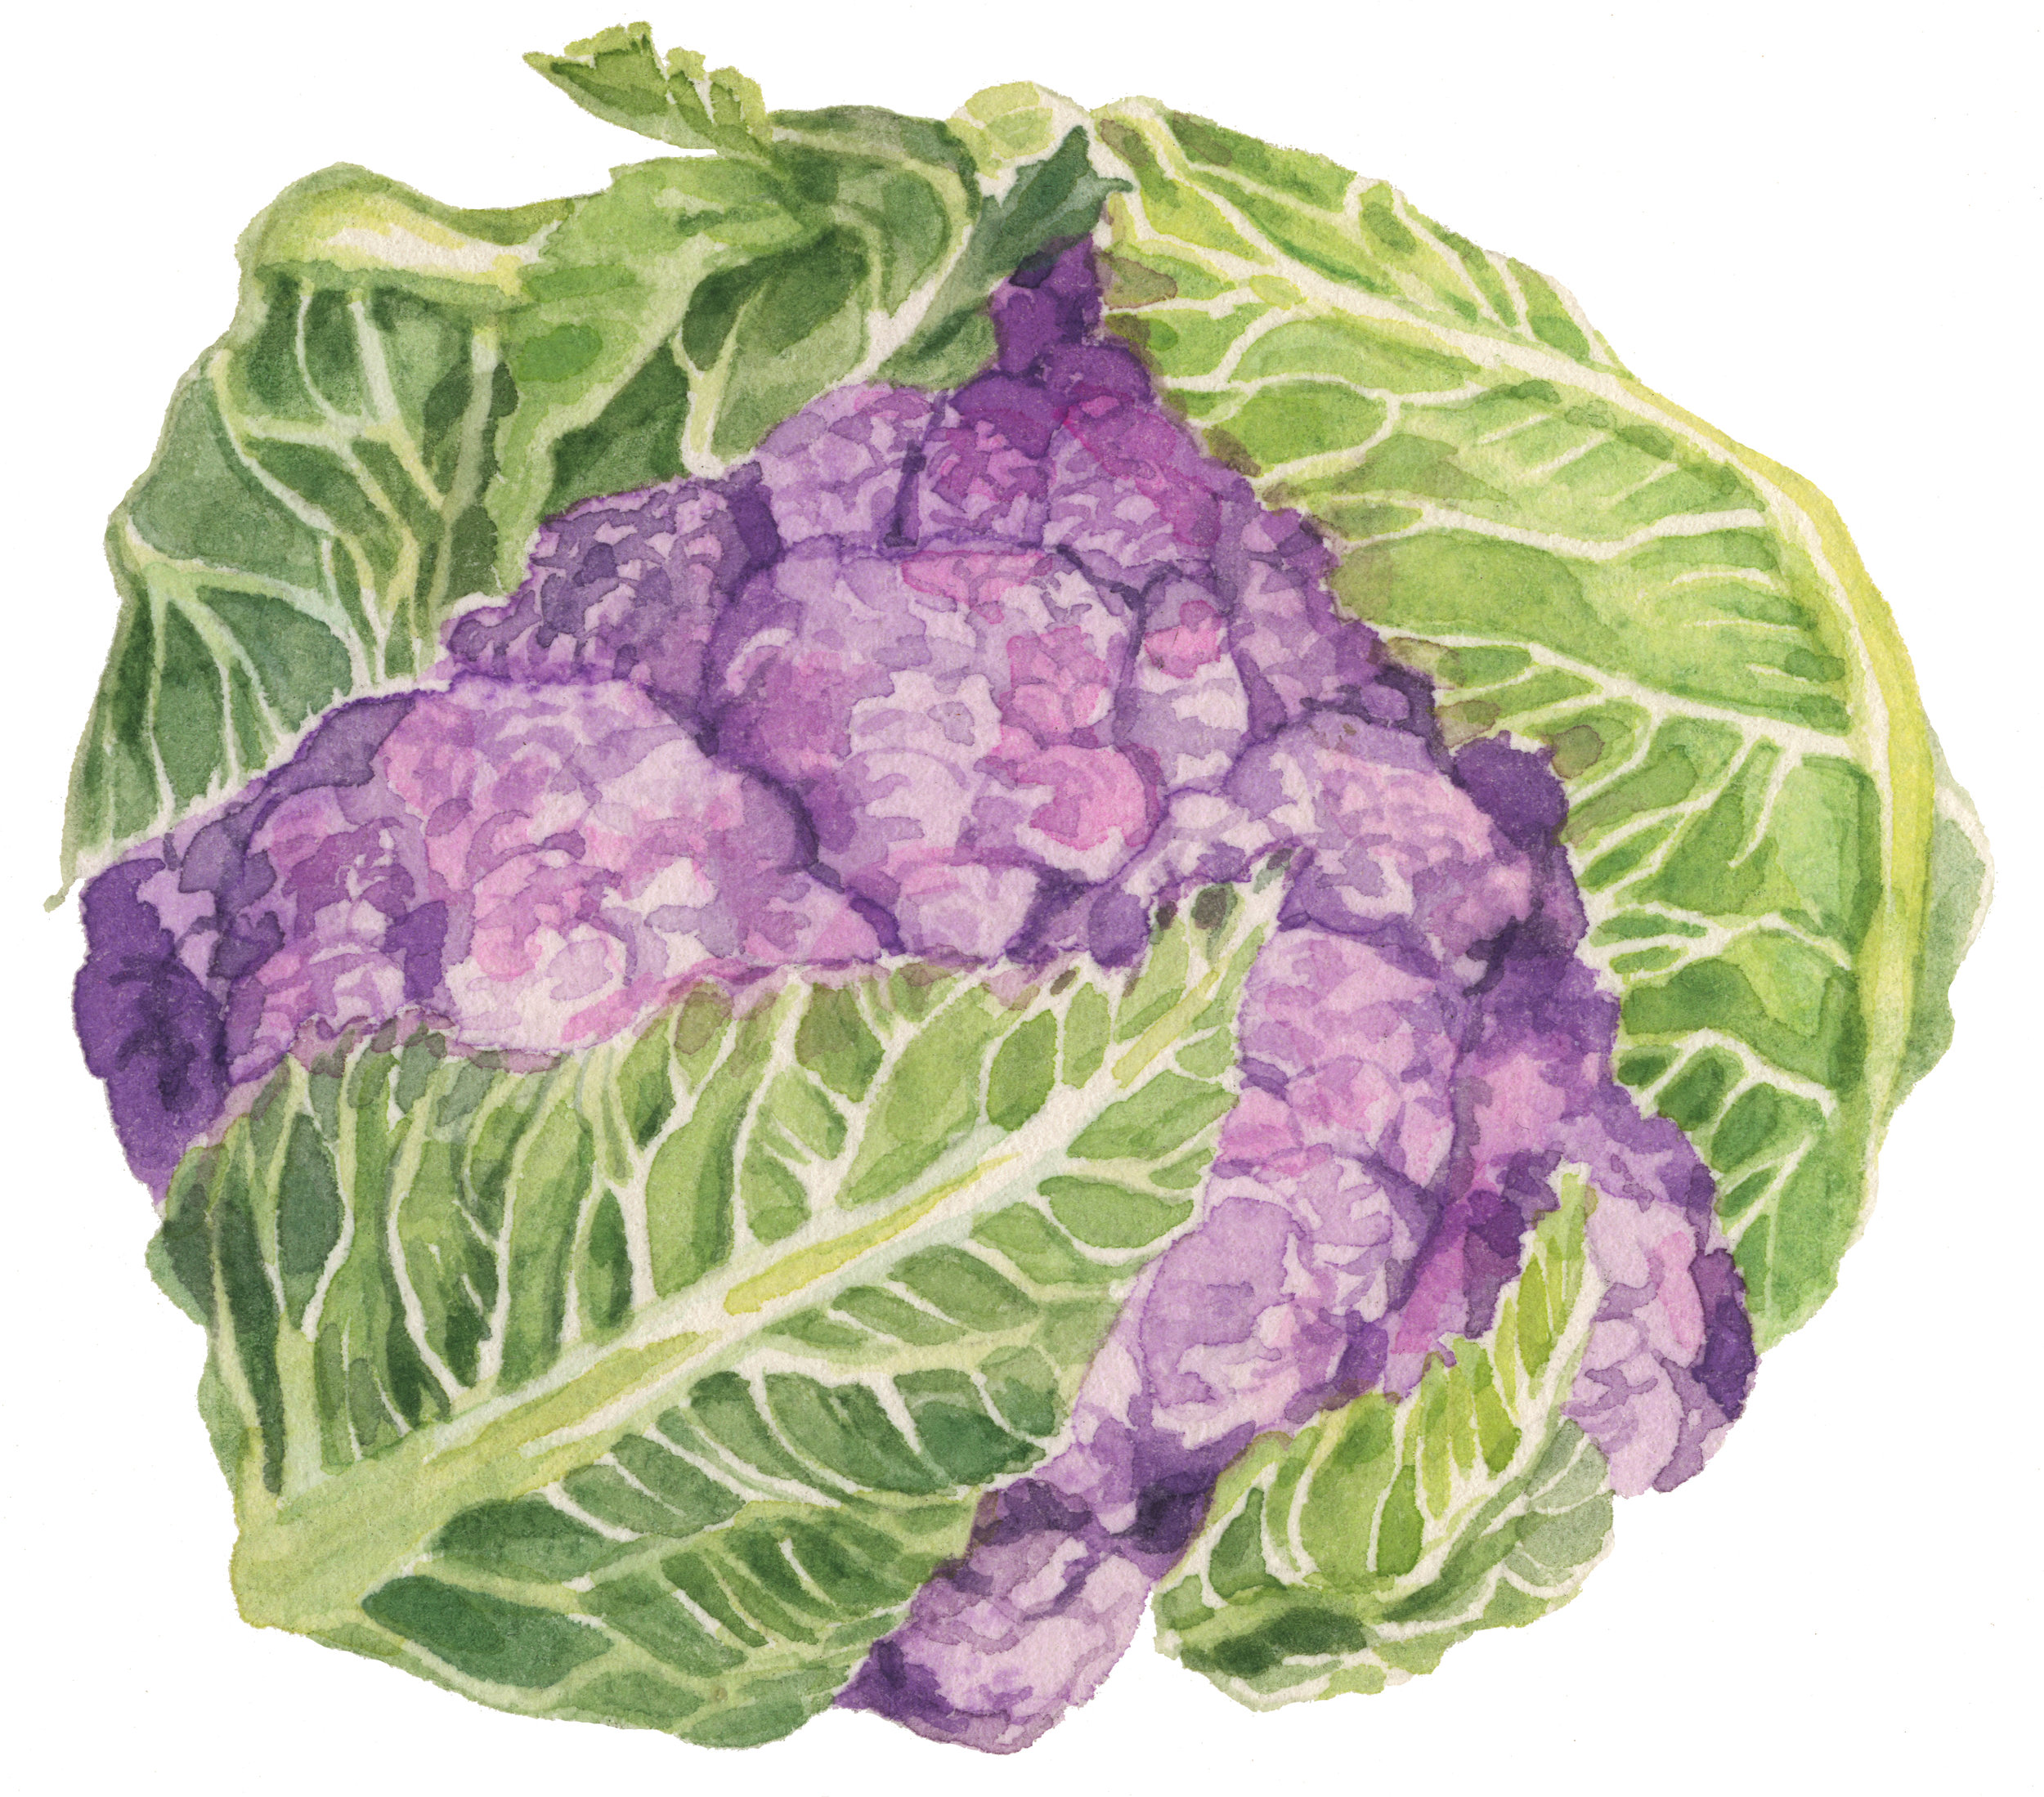 16-cauliflower-lrg.jpg